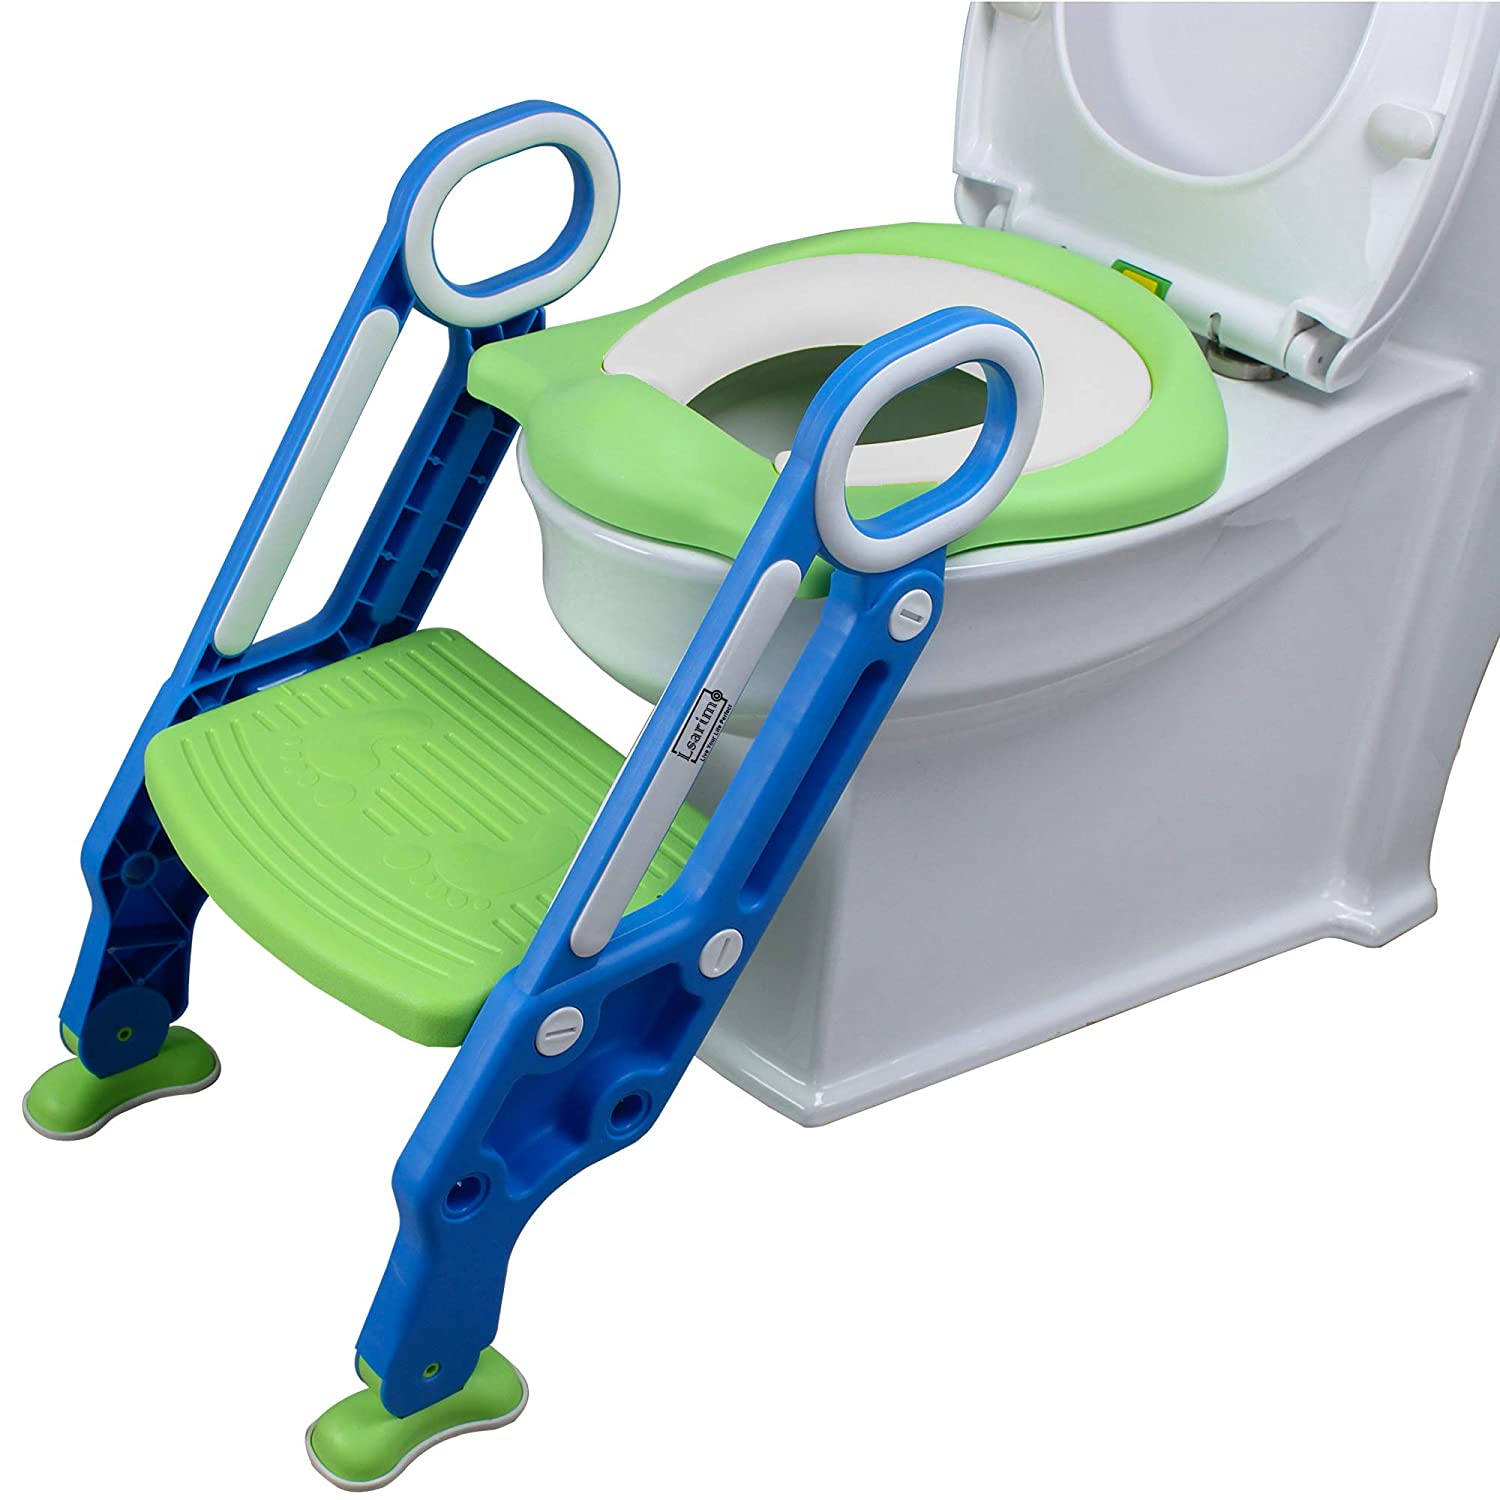 Lsarimo Foldable Potty Training Seat